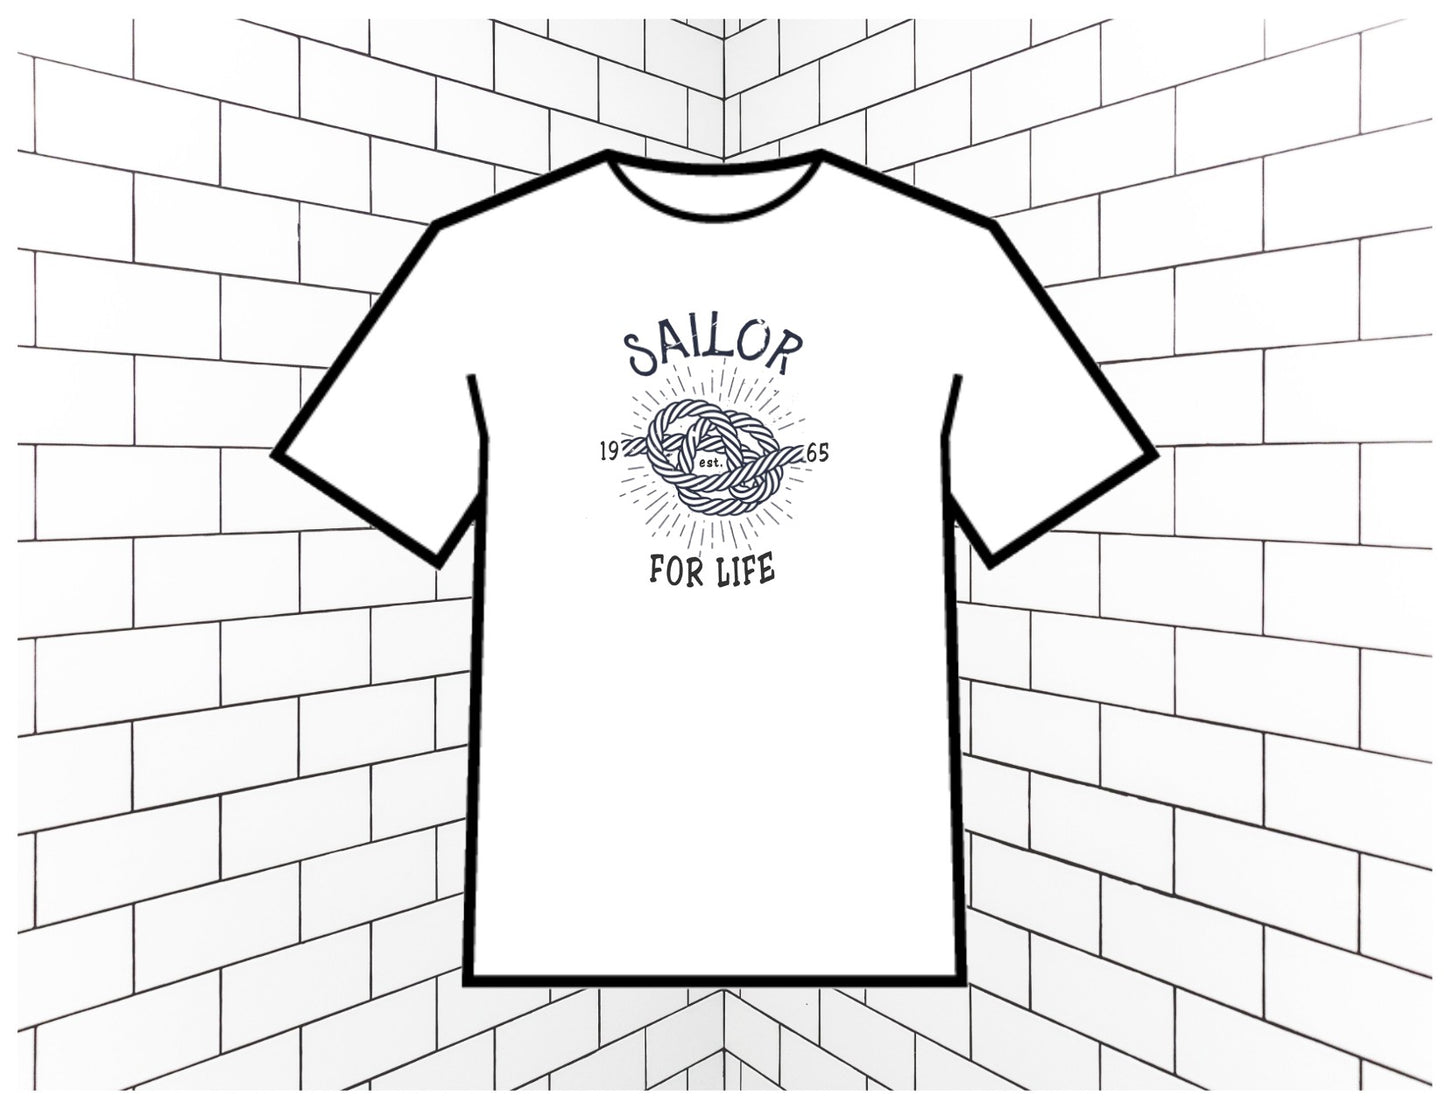 A Sailor for Life T-Shirt